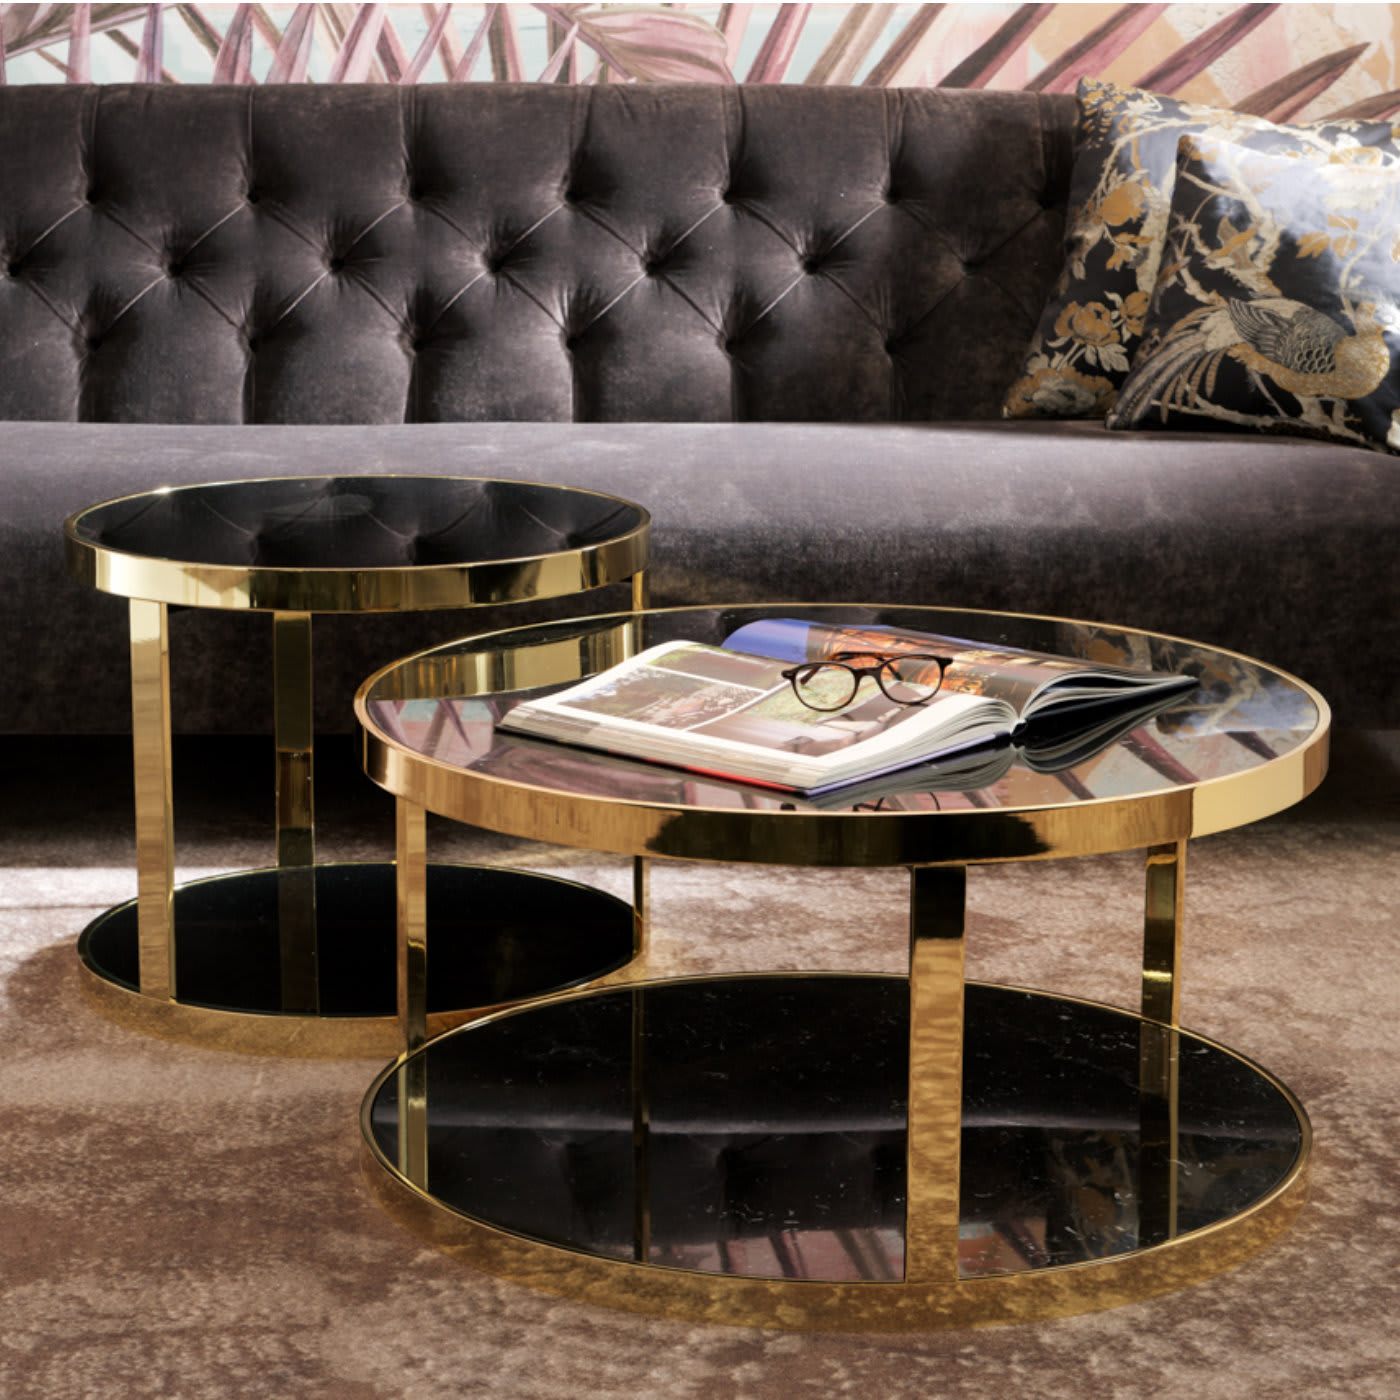 Luigi Coffee Table with Glossy Finish - DOM Edizioni